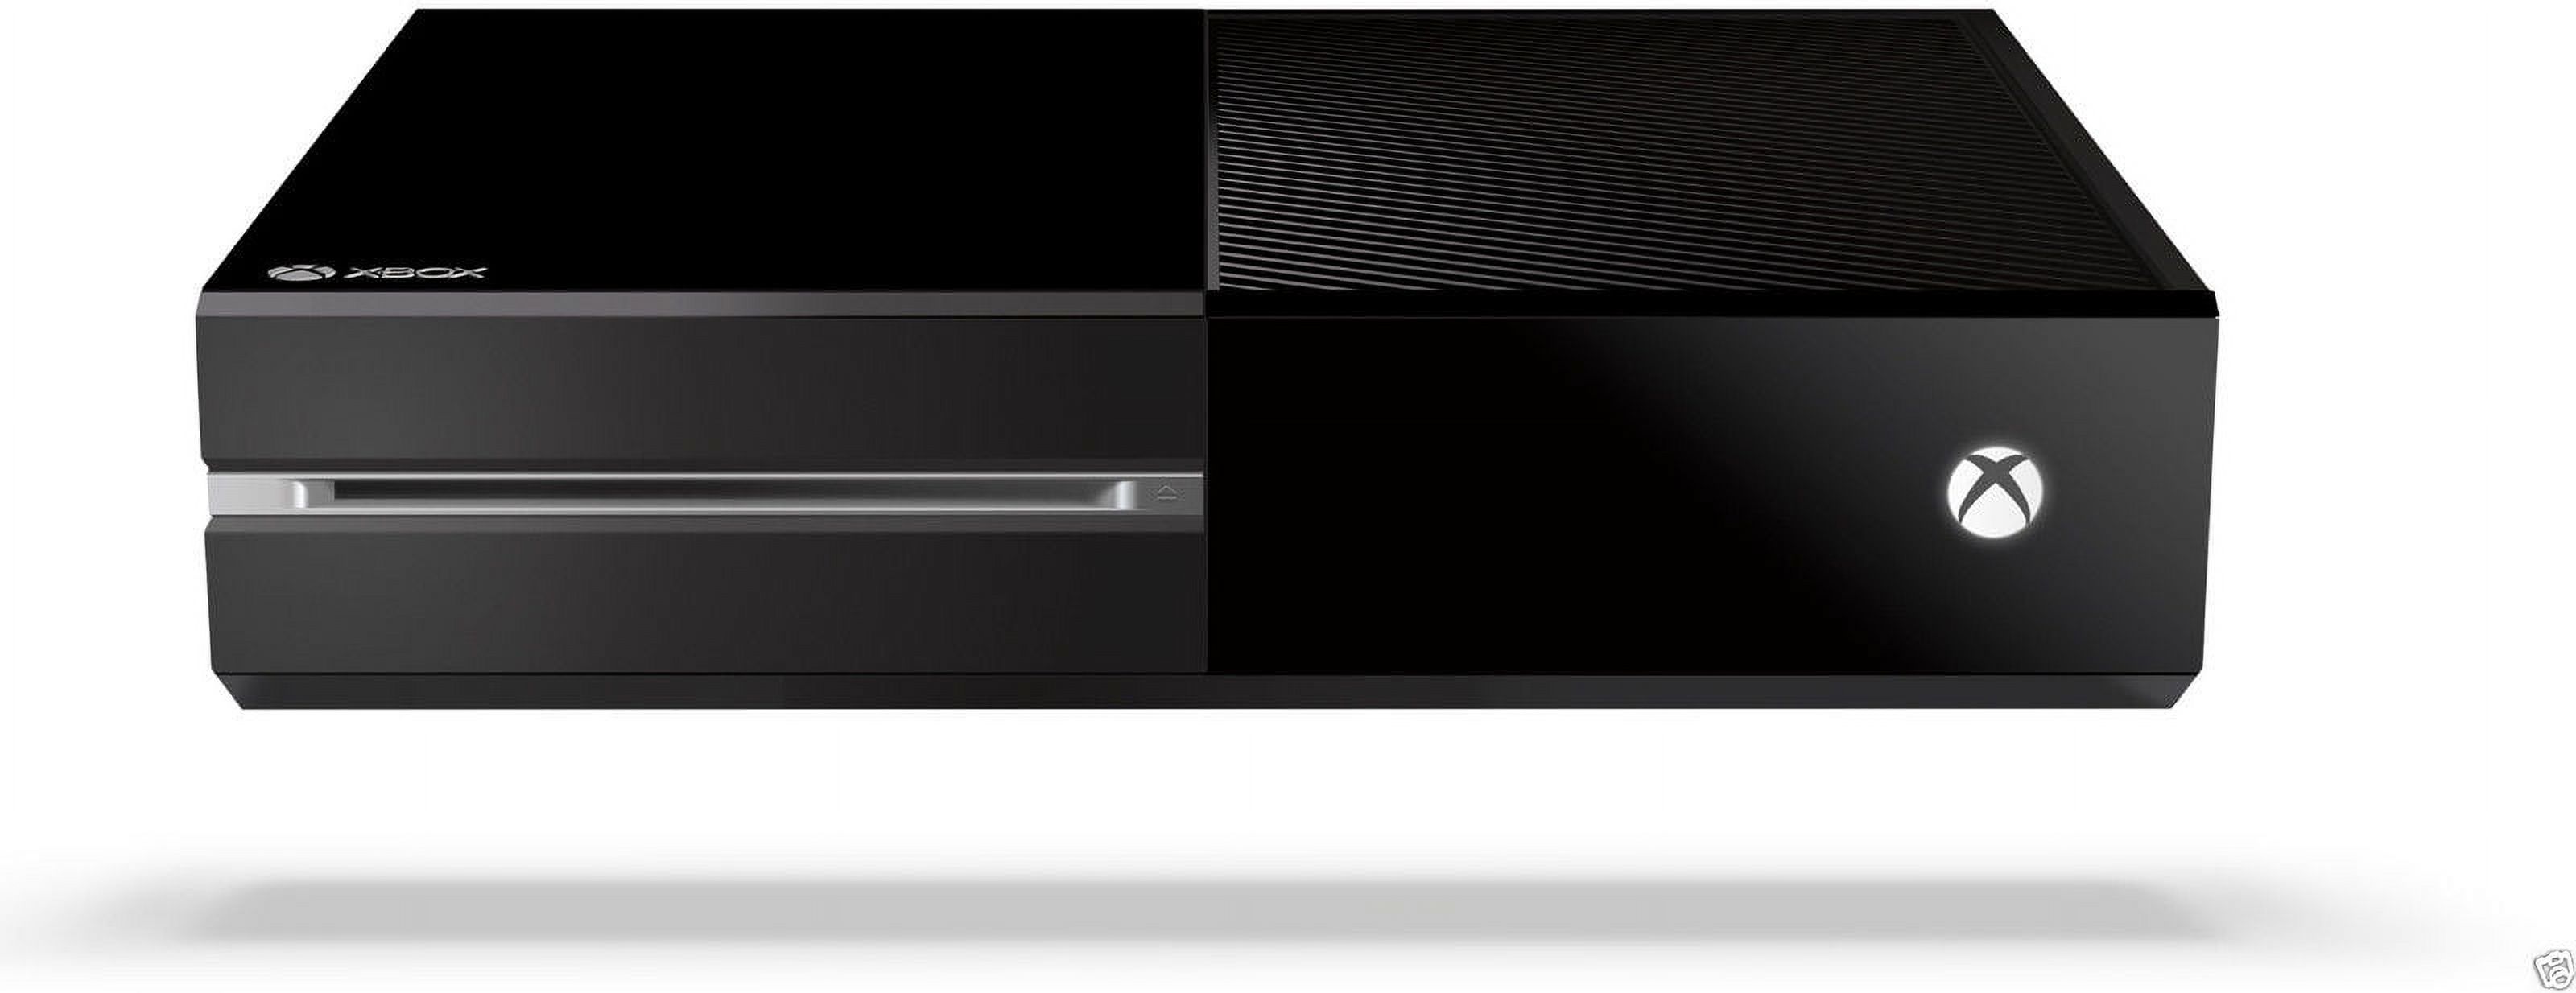 Restored Microsoft Xbox One 500gb (Refurbished) - image 2 of 4